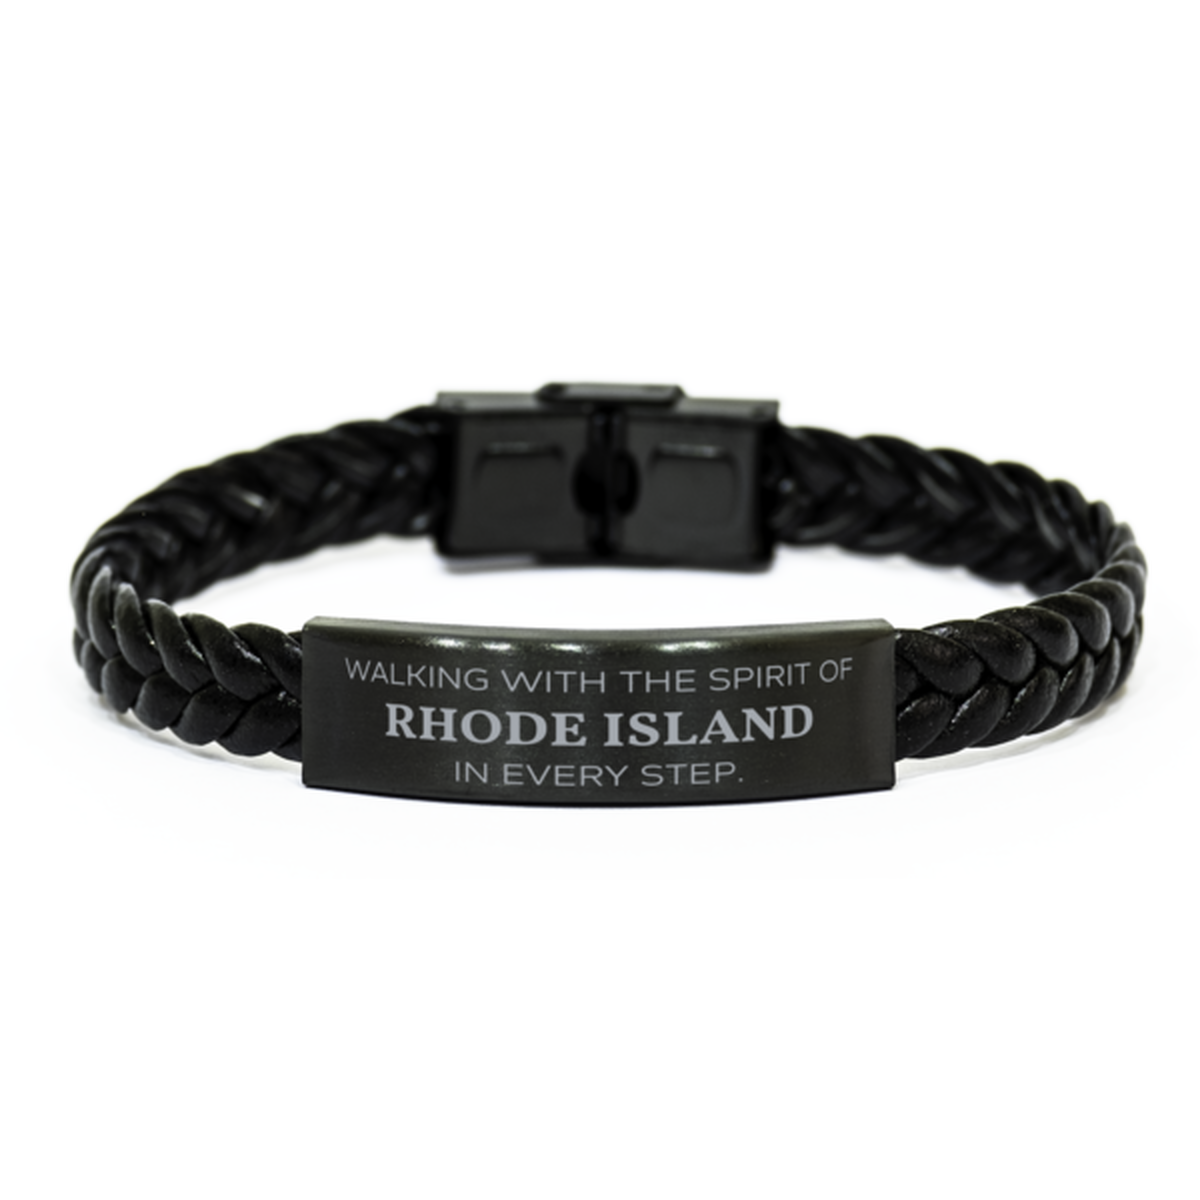 Rhode Island Gifts, Walking with the spirit, Love Rhode Island Birthday Christmas Braided Leather Bracelet For Rhode Island People, Men, Women, Friends